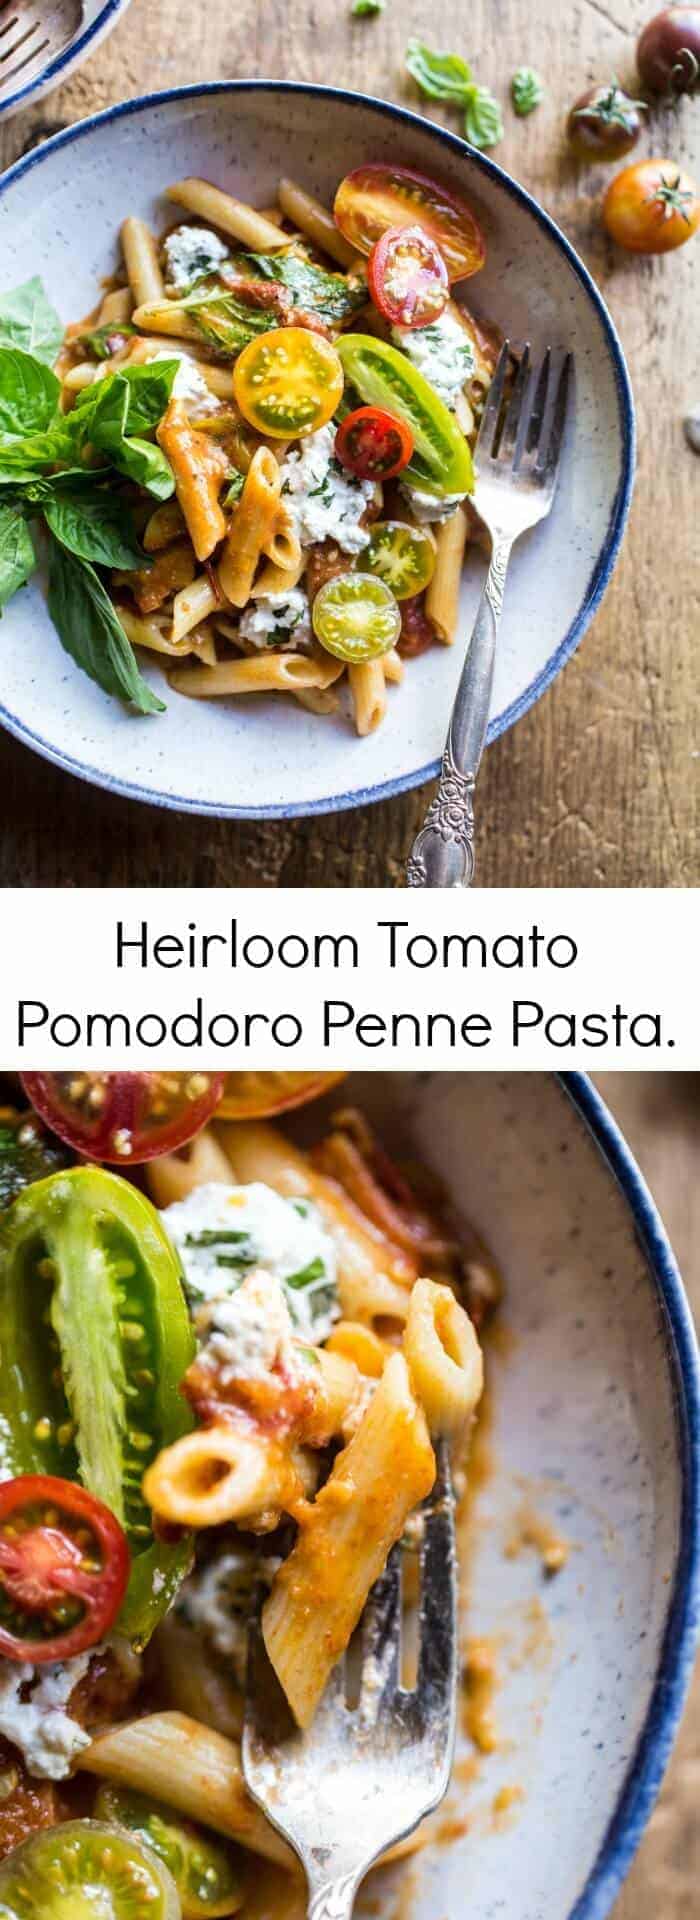 Heirloom Tomato Pomodoro Penne Pasta | halfbakedharvest.com @hbharvest